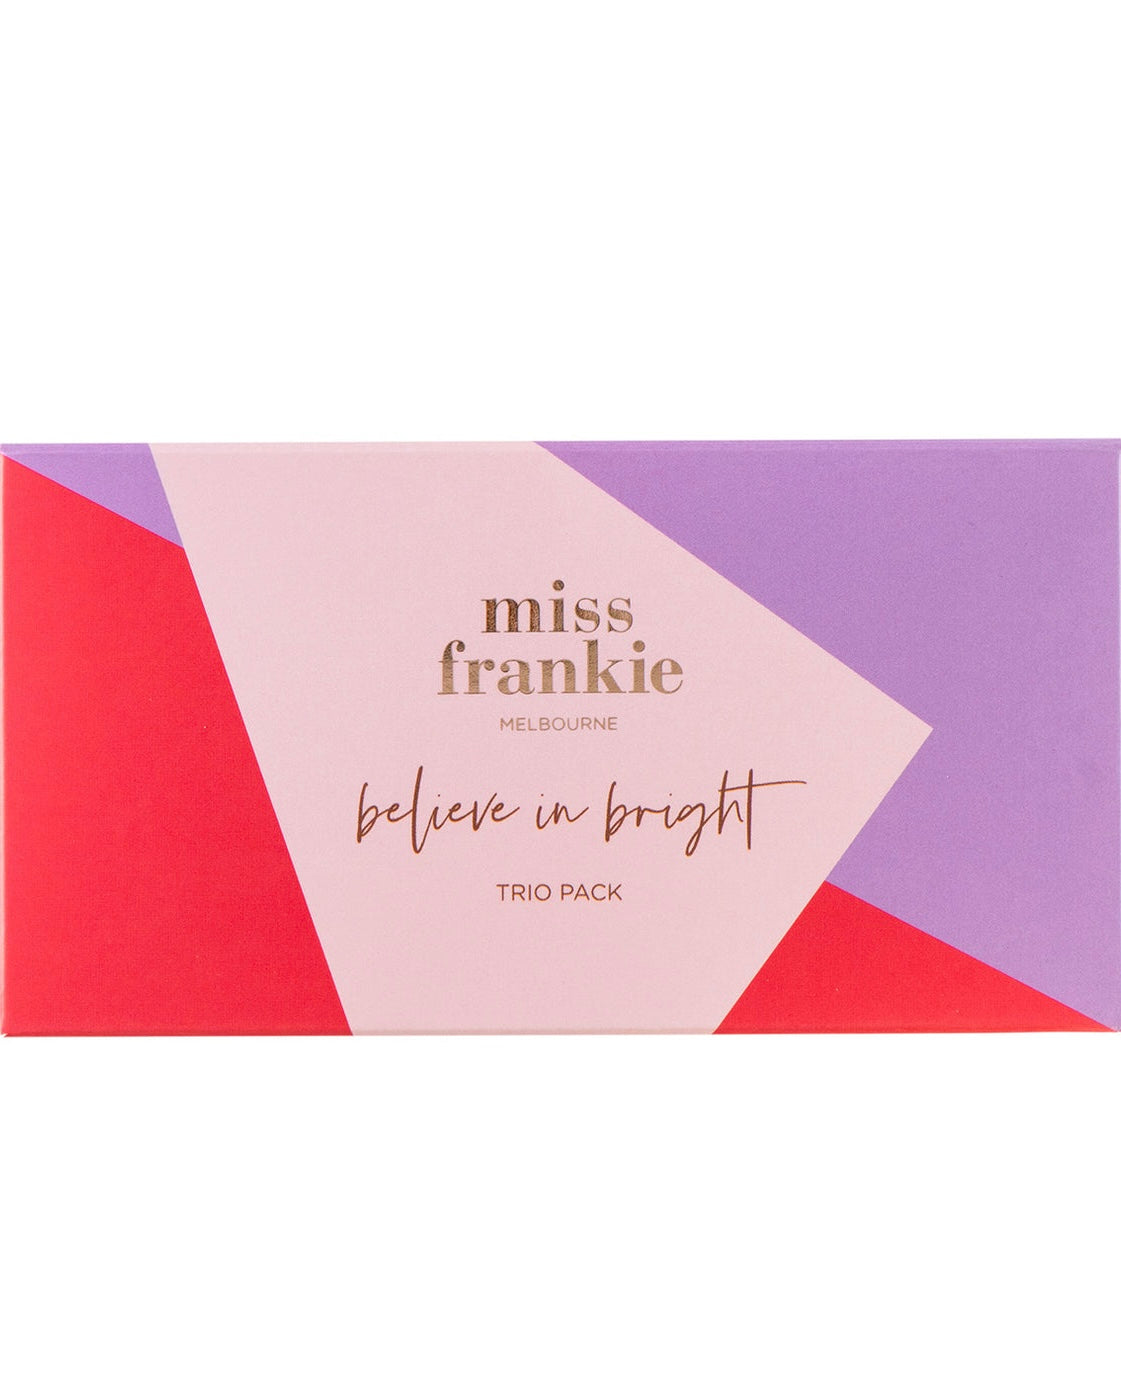 miss frankie, nail polish, gift set, vegan, 10 free, believe in bright